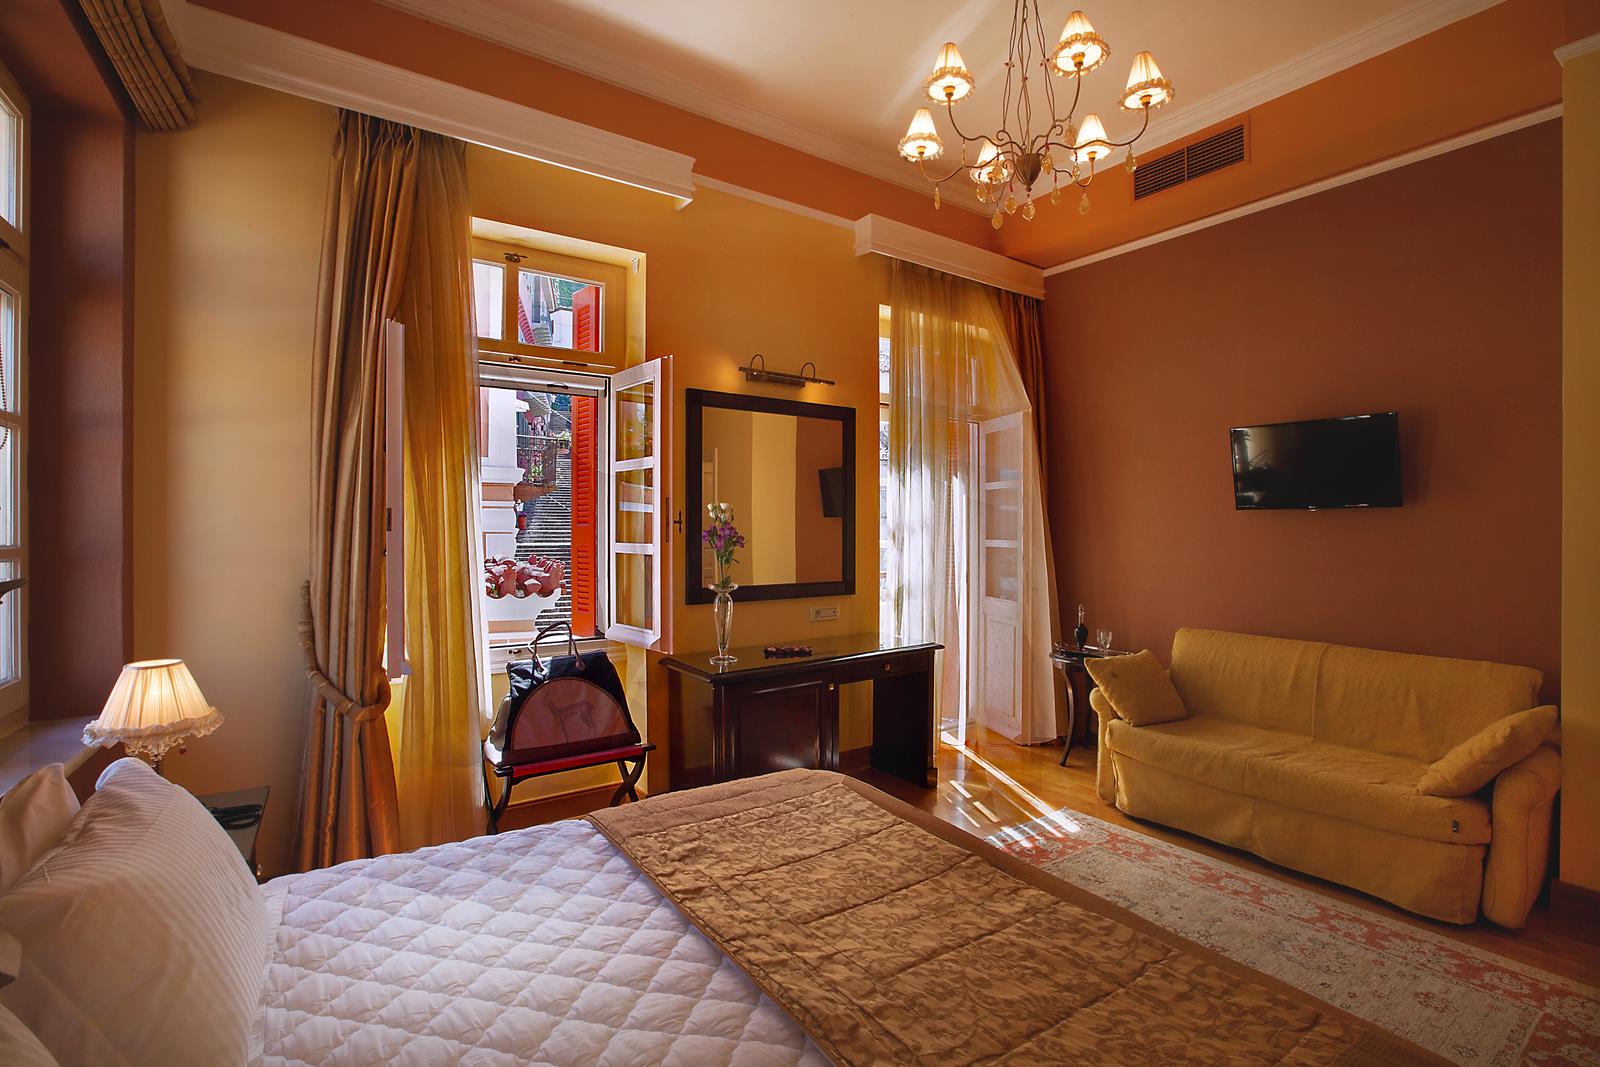 nafplio greece accommodation - Aetoma hotel